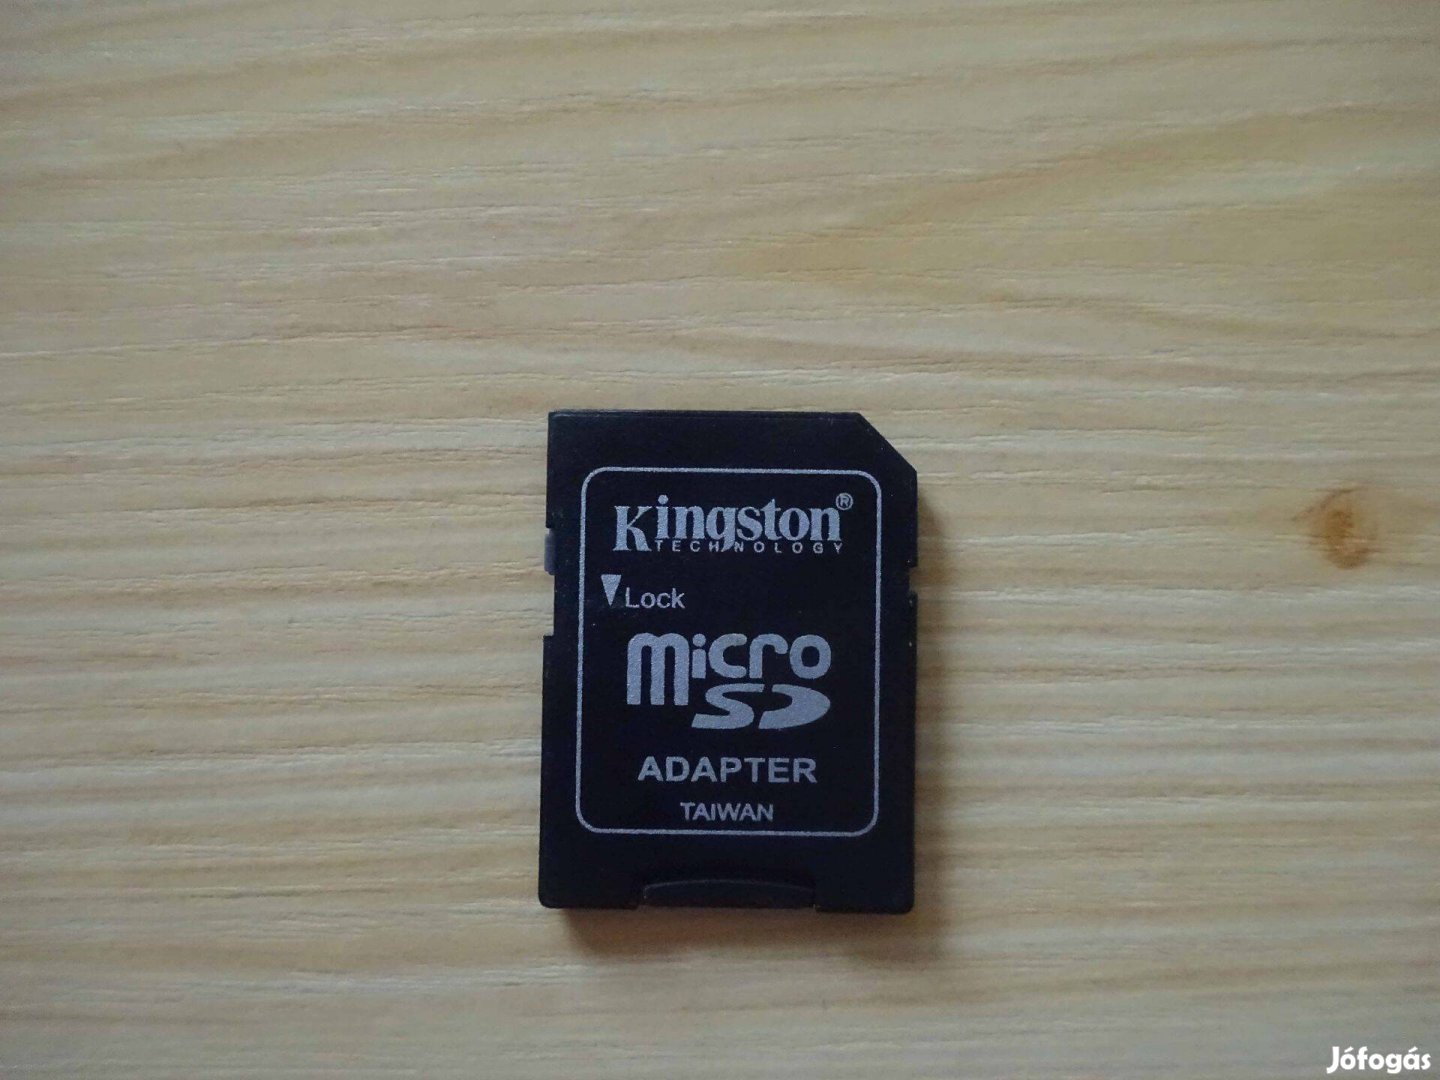 Kingston Microsd Adapter